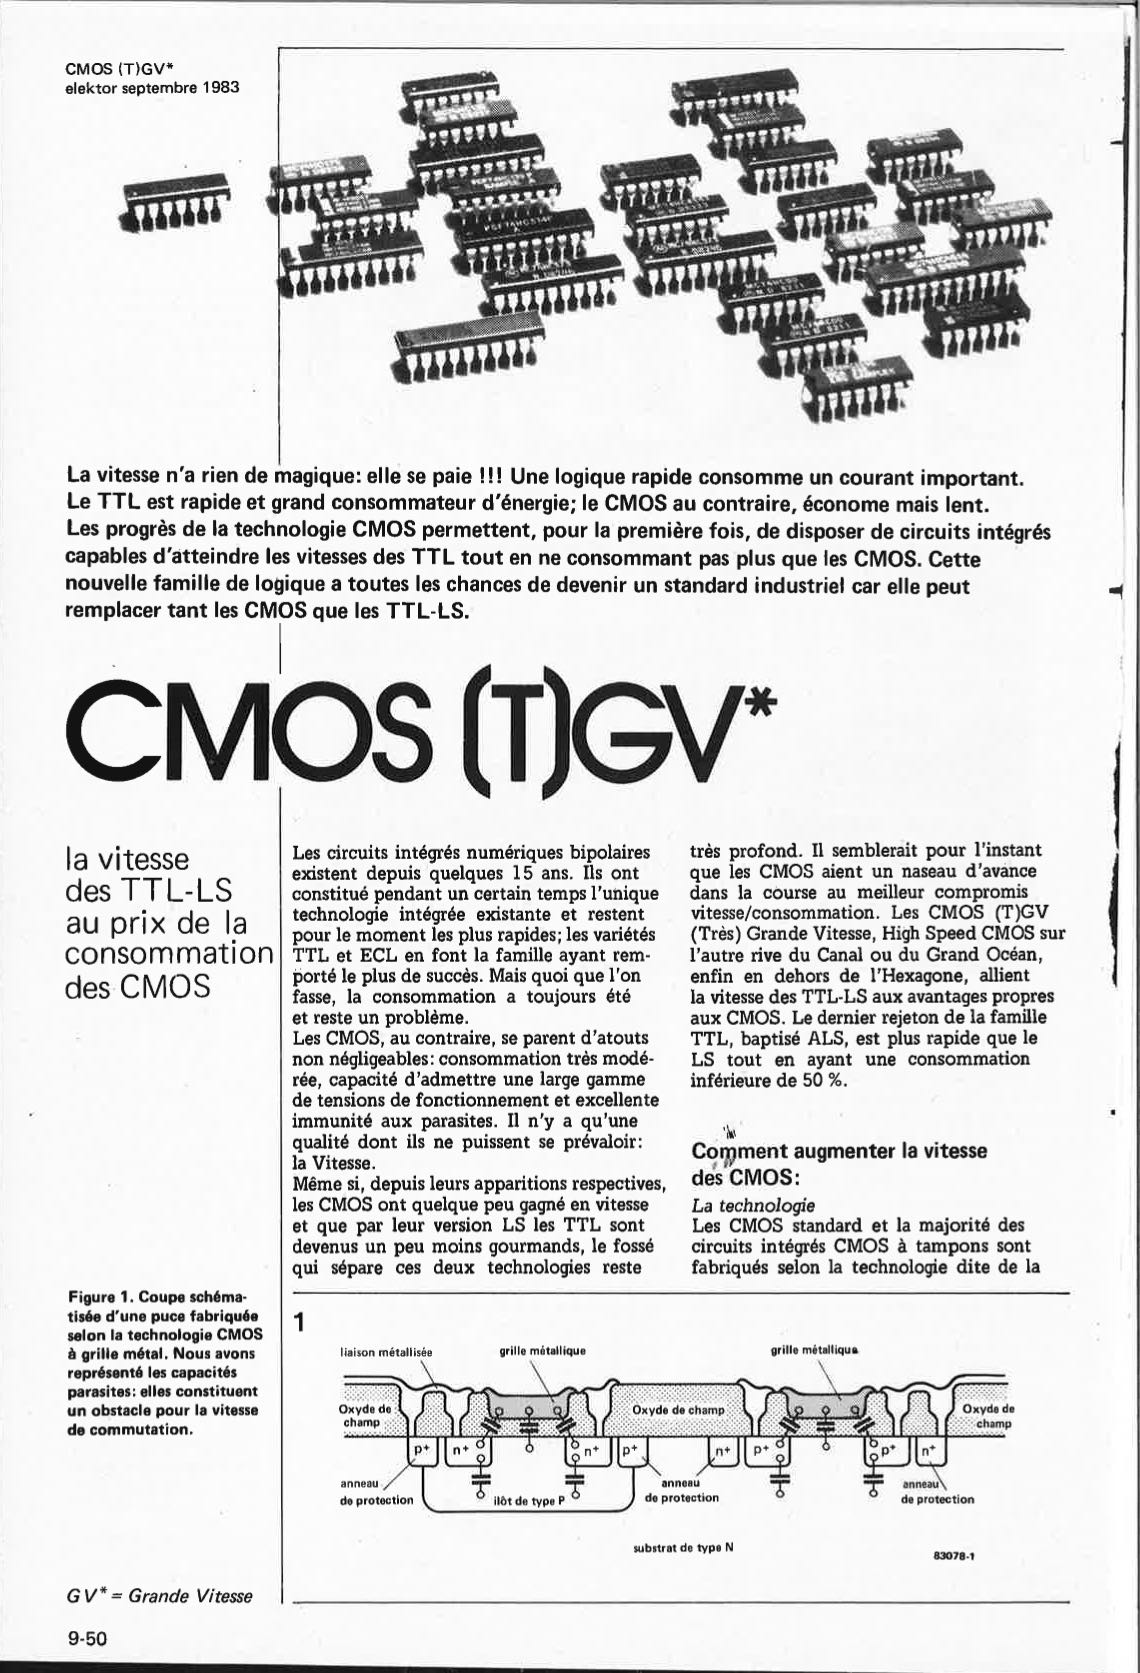 CMOS TGV*